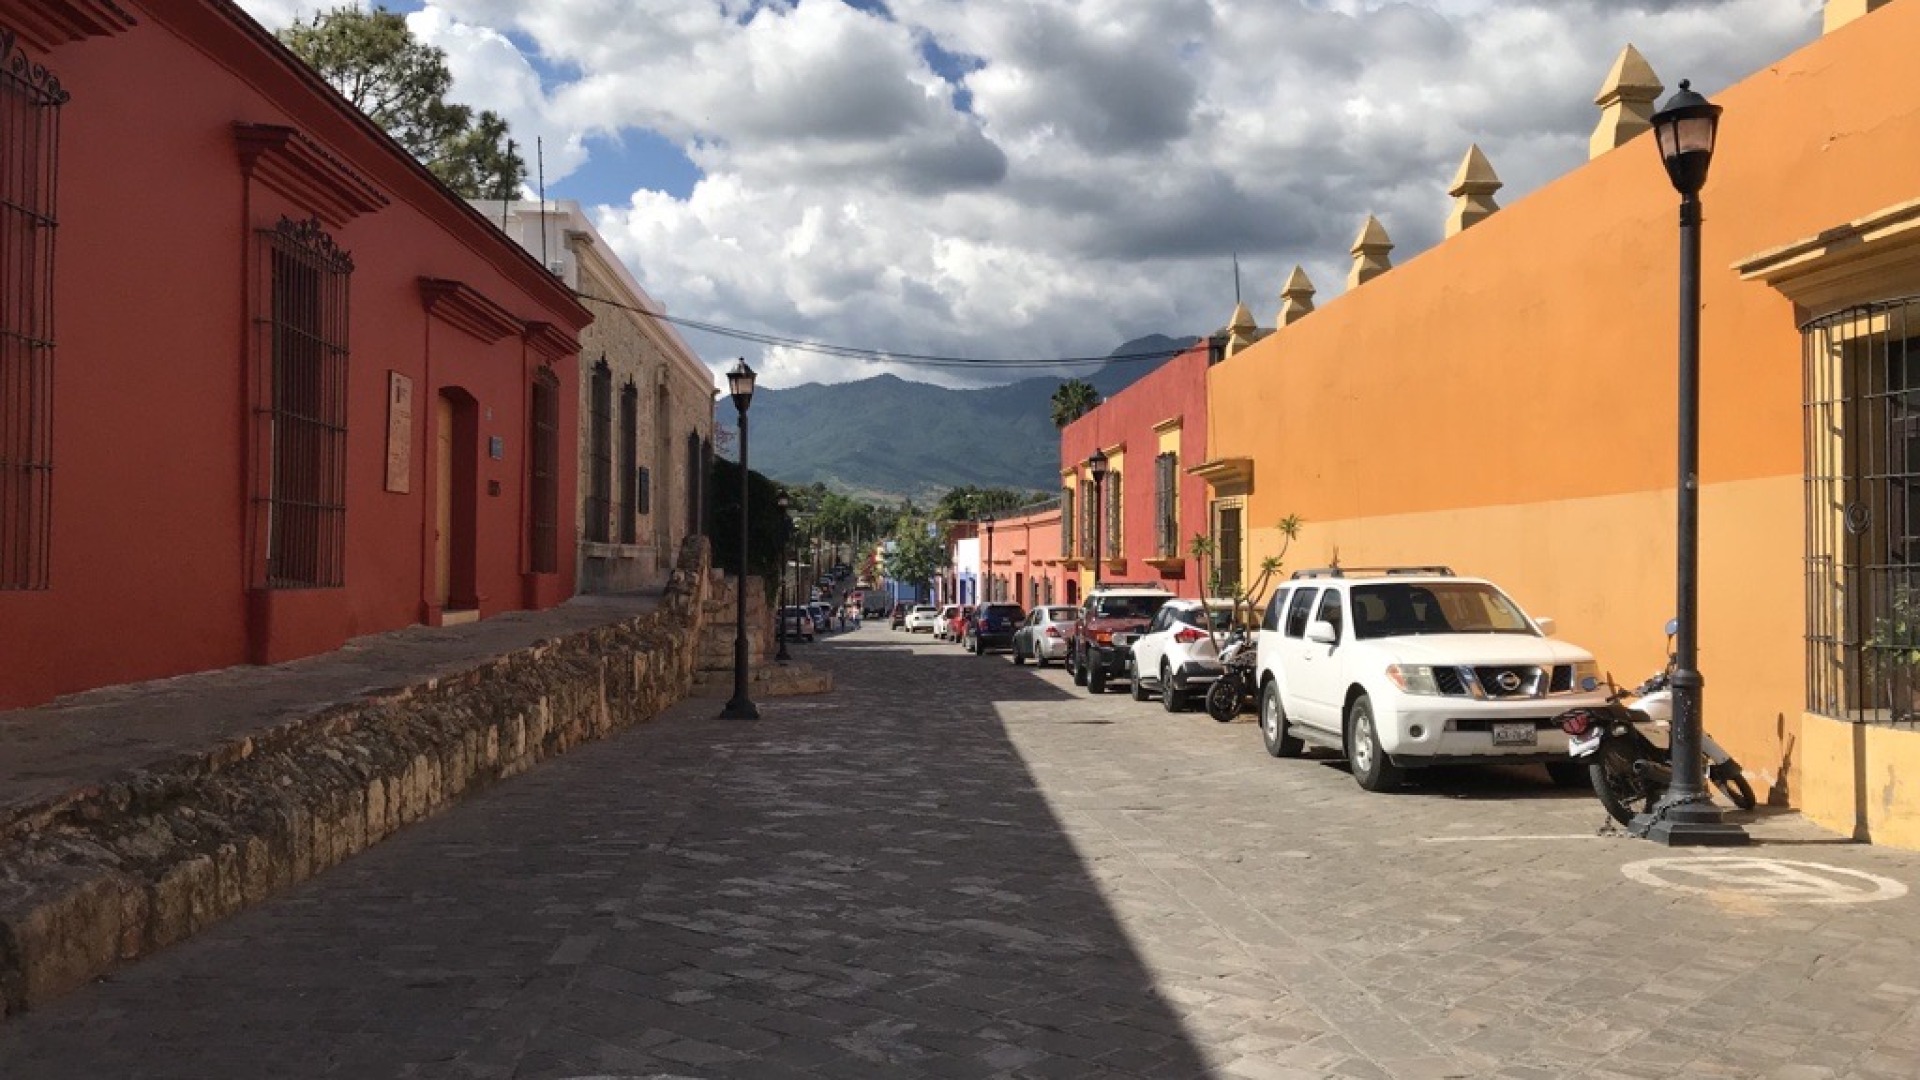 Architecture in Oaxaca